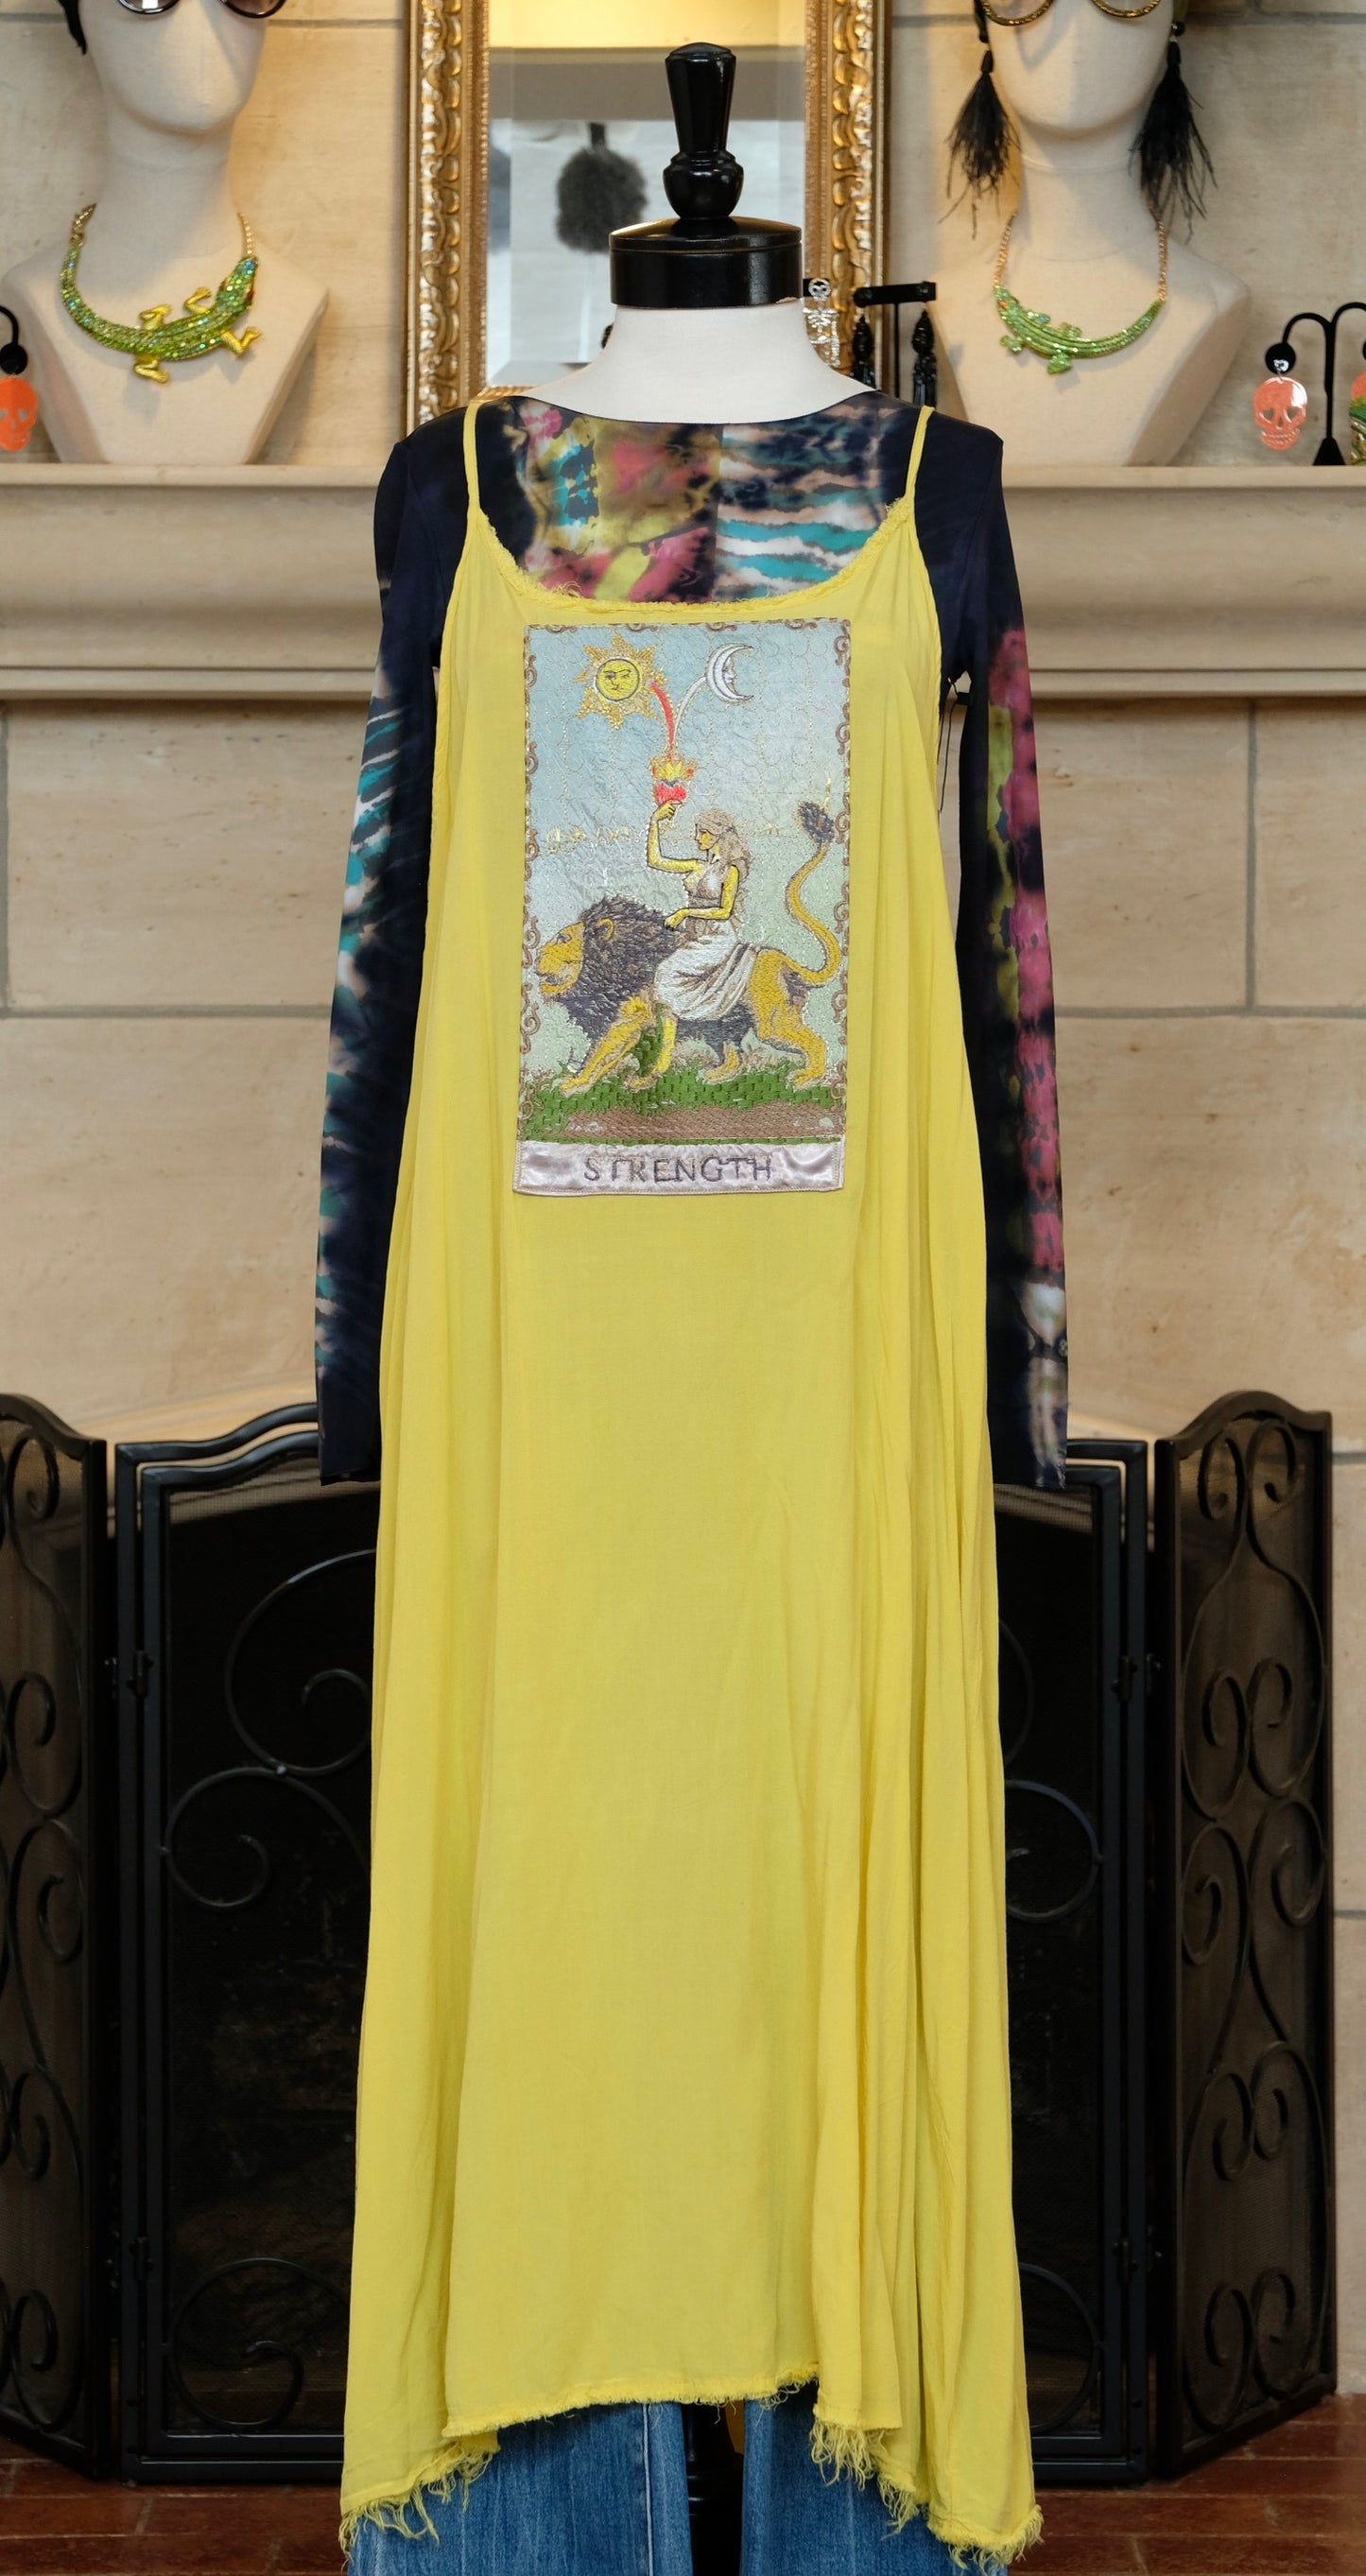 Strength Tarot Card Dress in Yellow